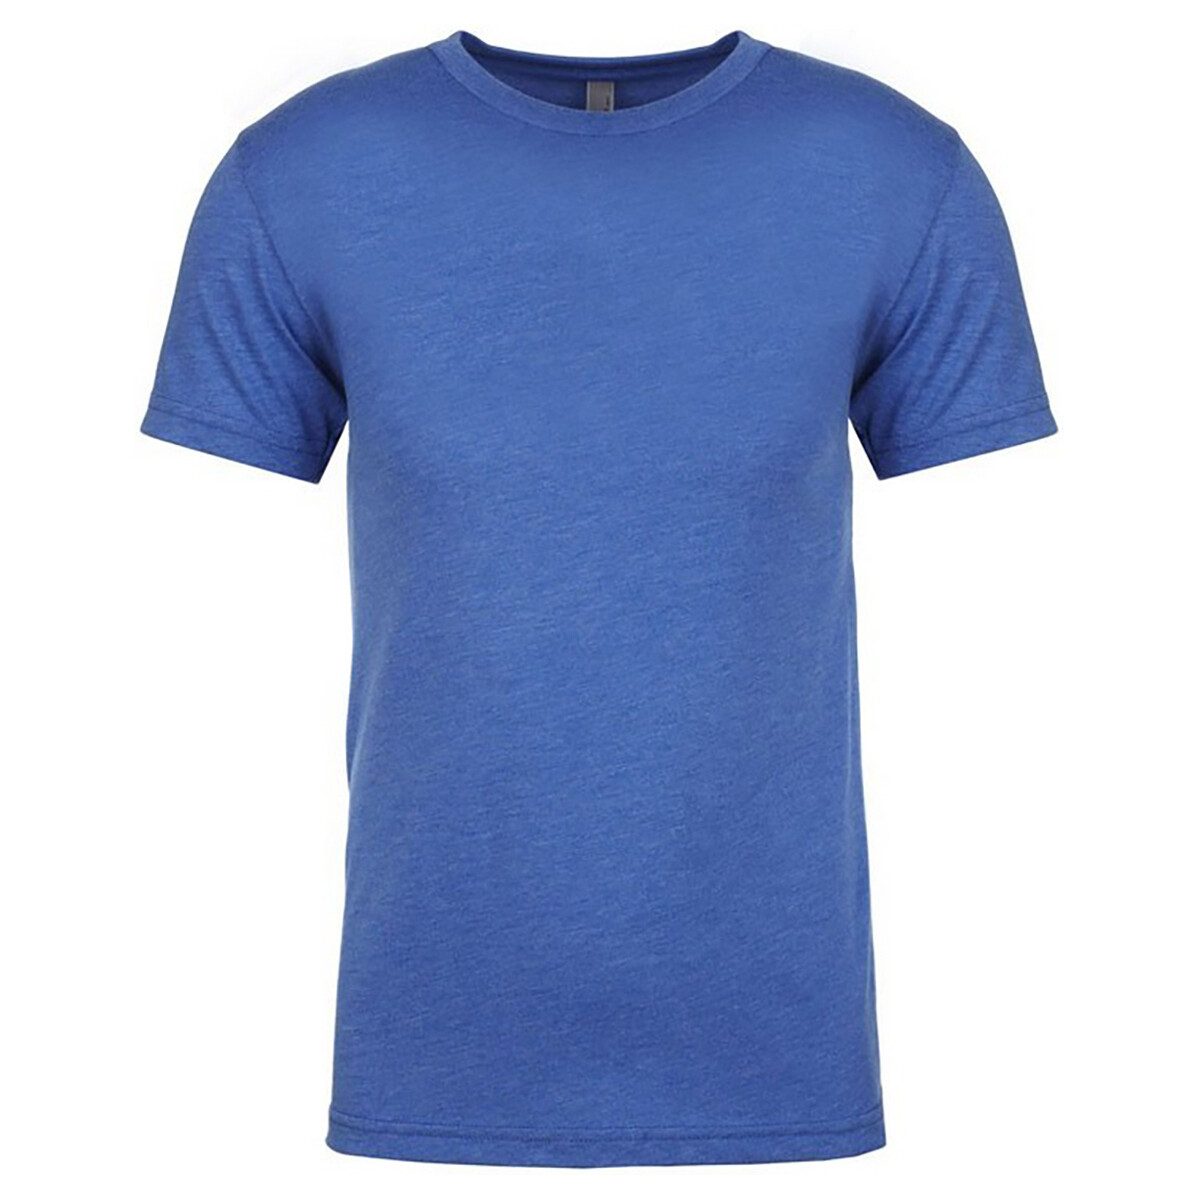 textil Hombre Camisetas manga larga Next Level Tri-Blend Azul